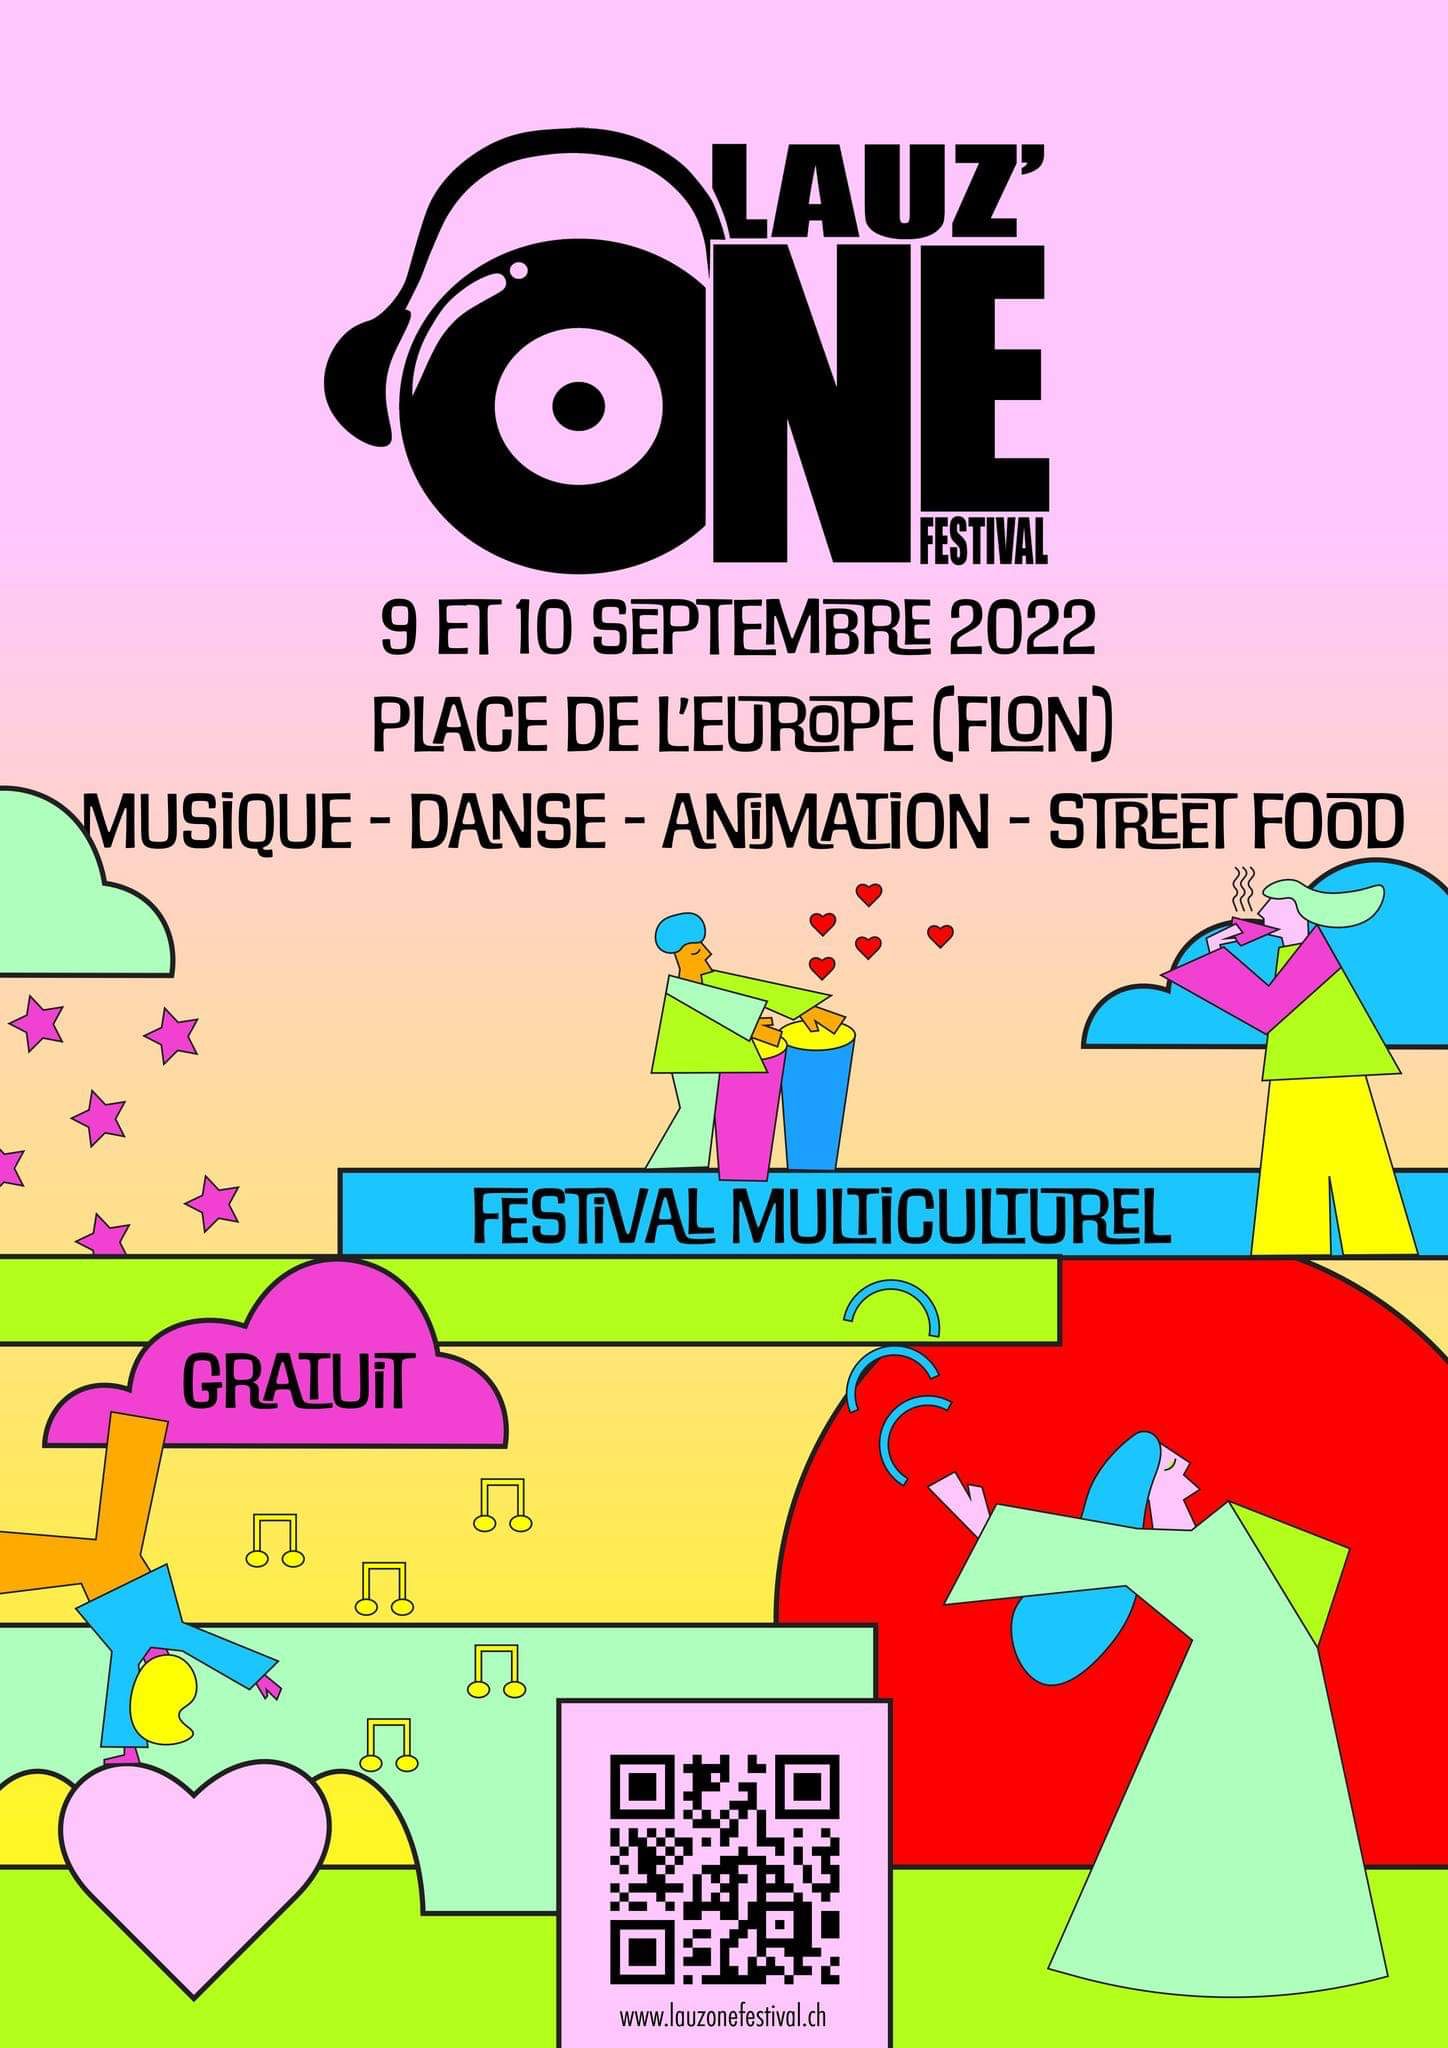 Lauz'one Festival 2022